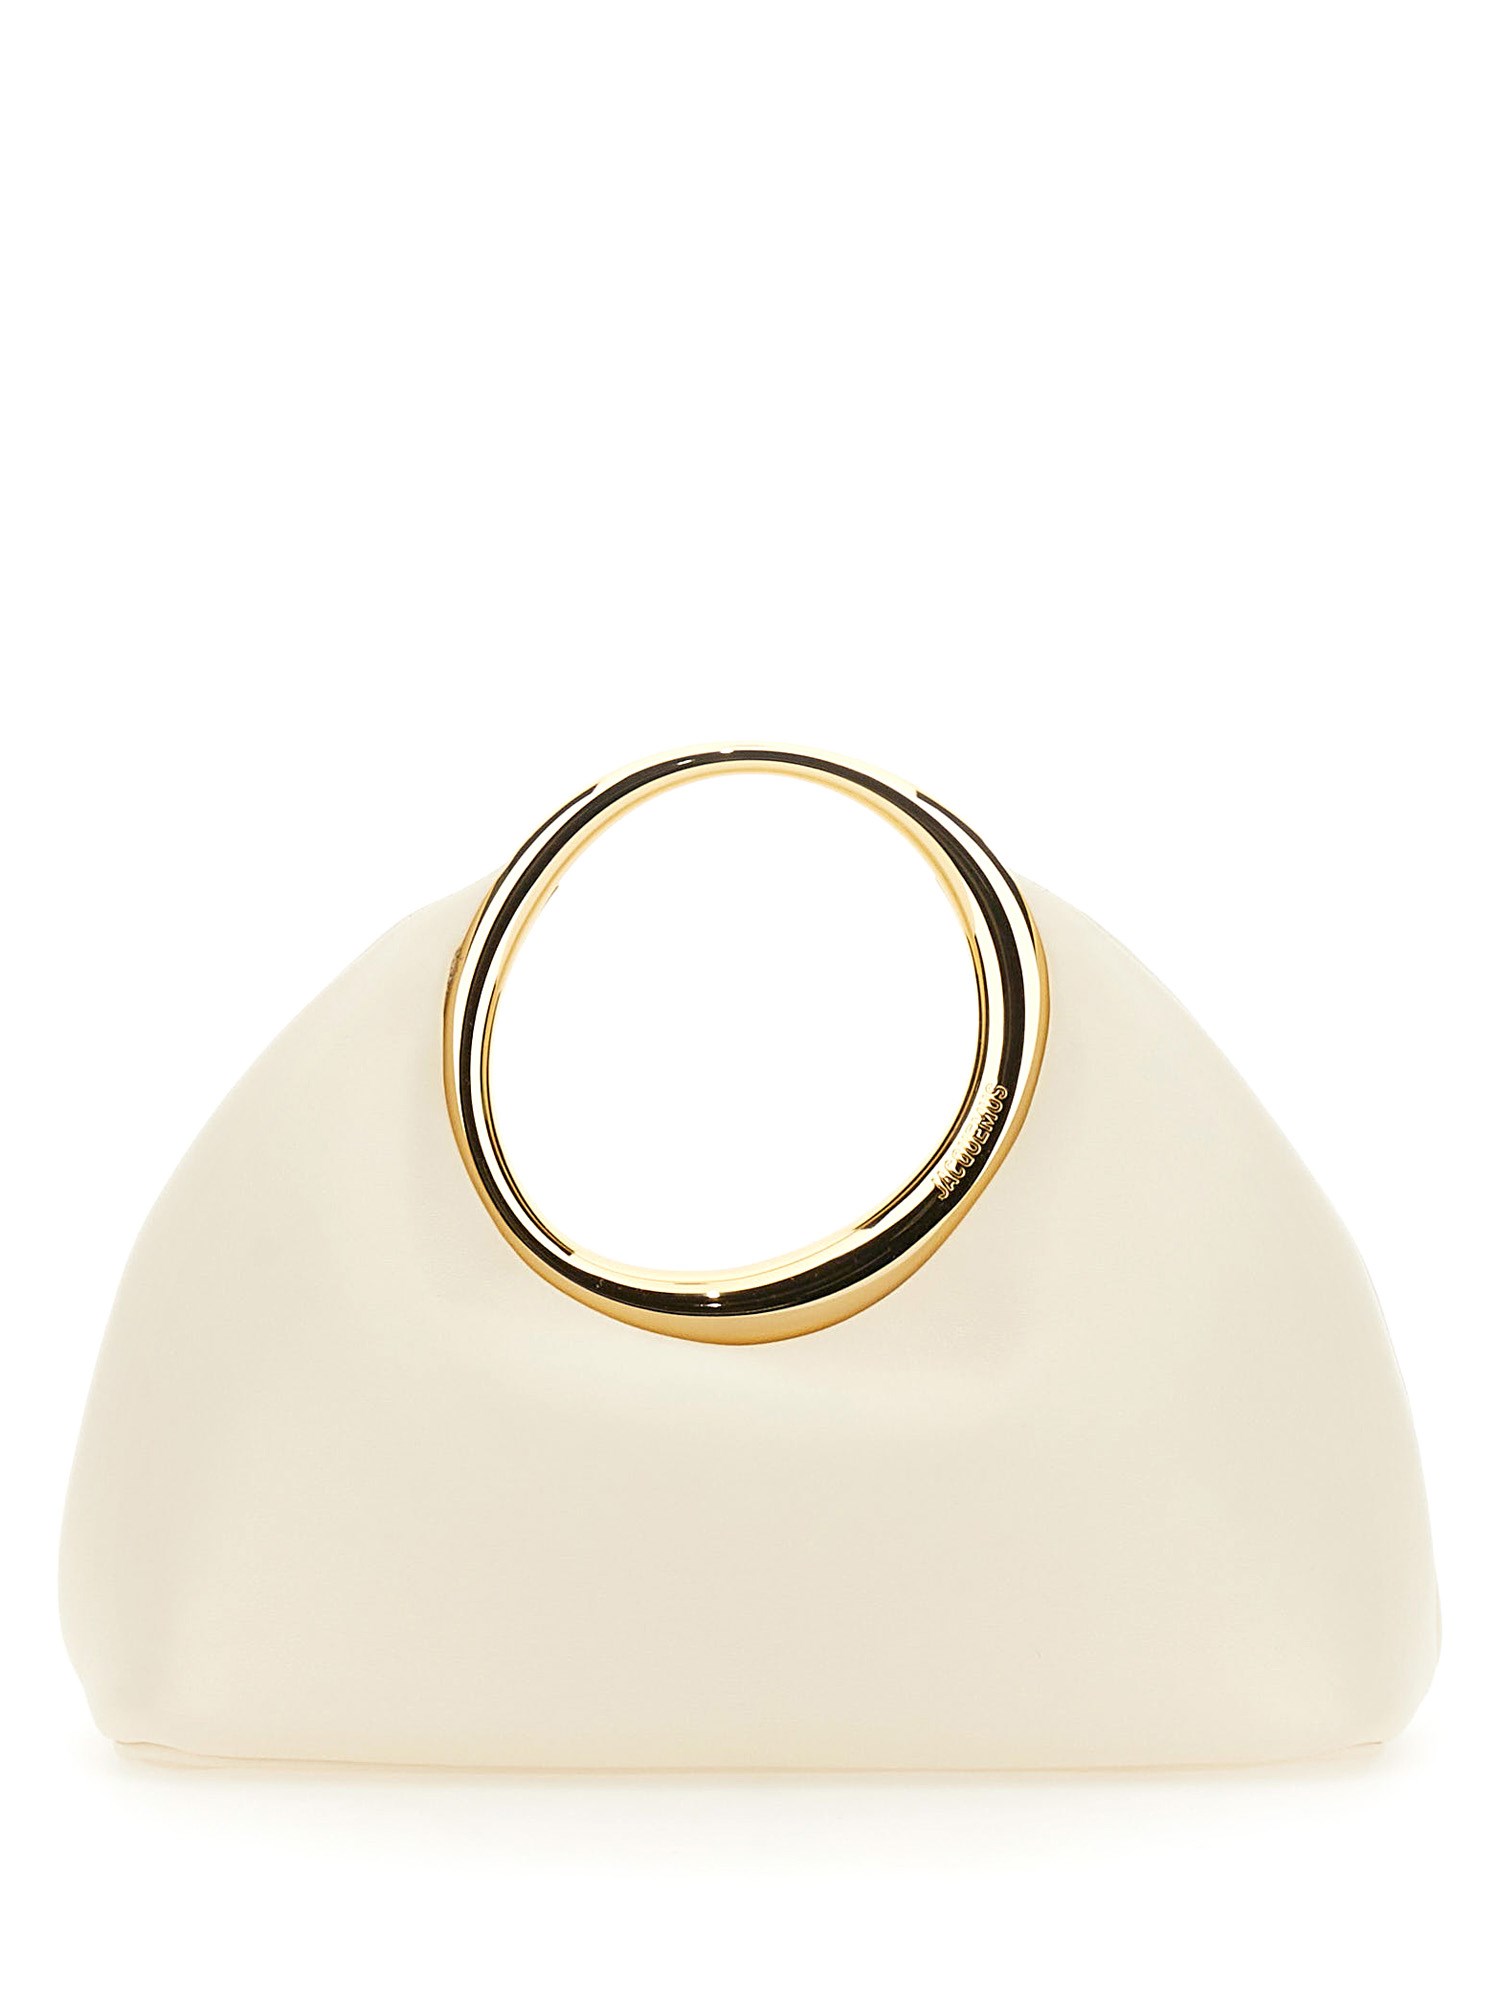 Jacquemus Le Petit Calino Handbag Light Ivory